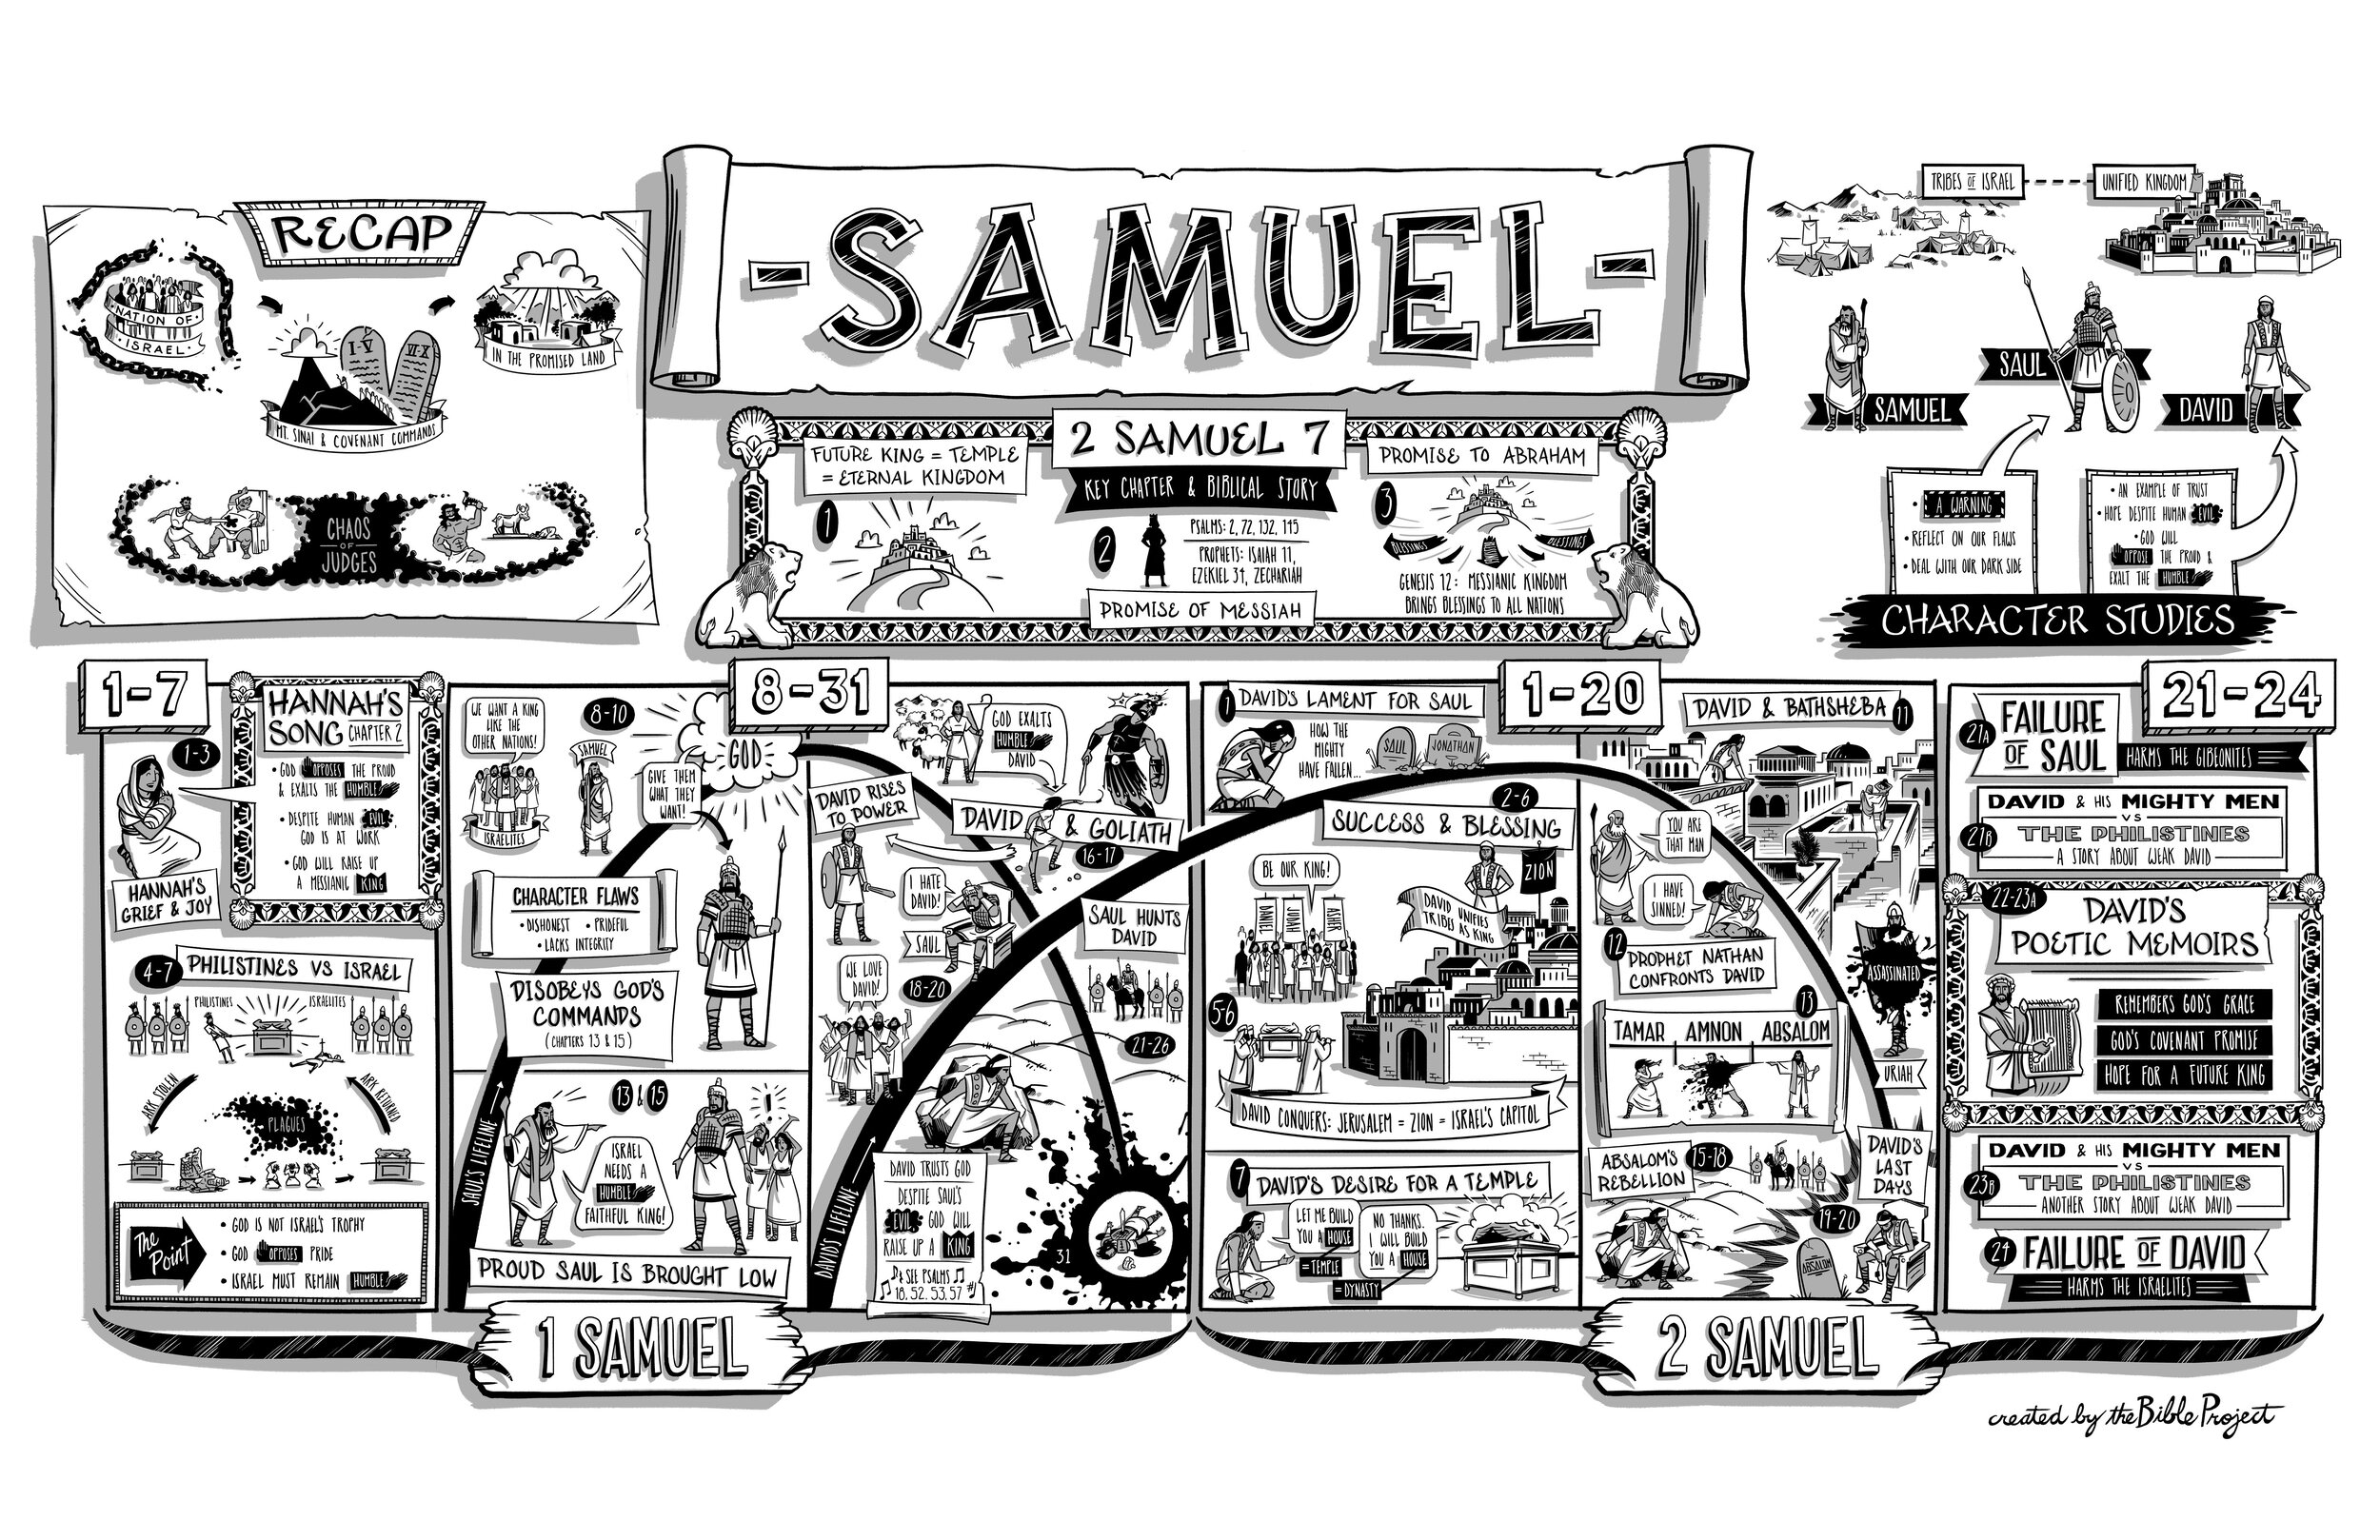 BibleProject: 1 Samuel (Video)